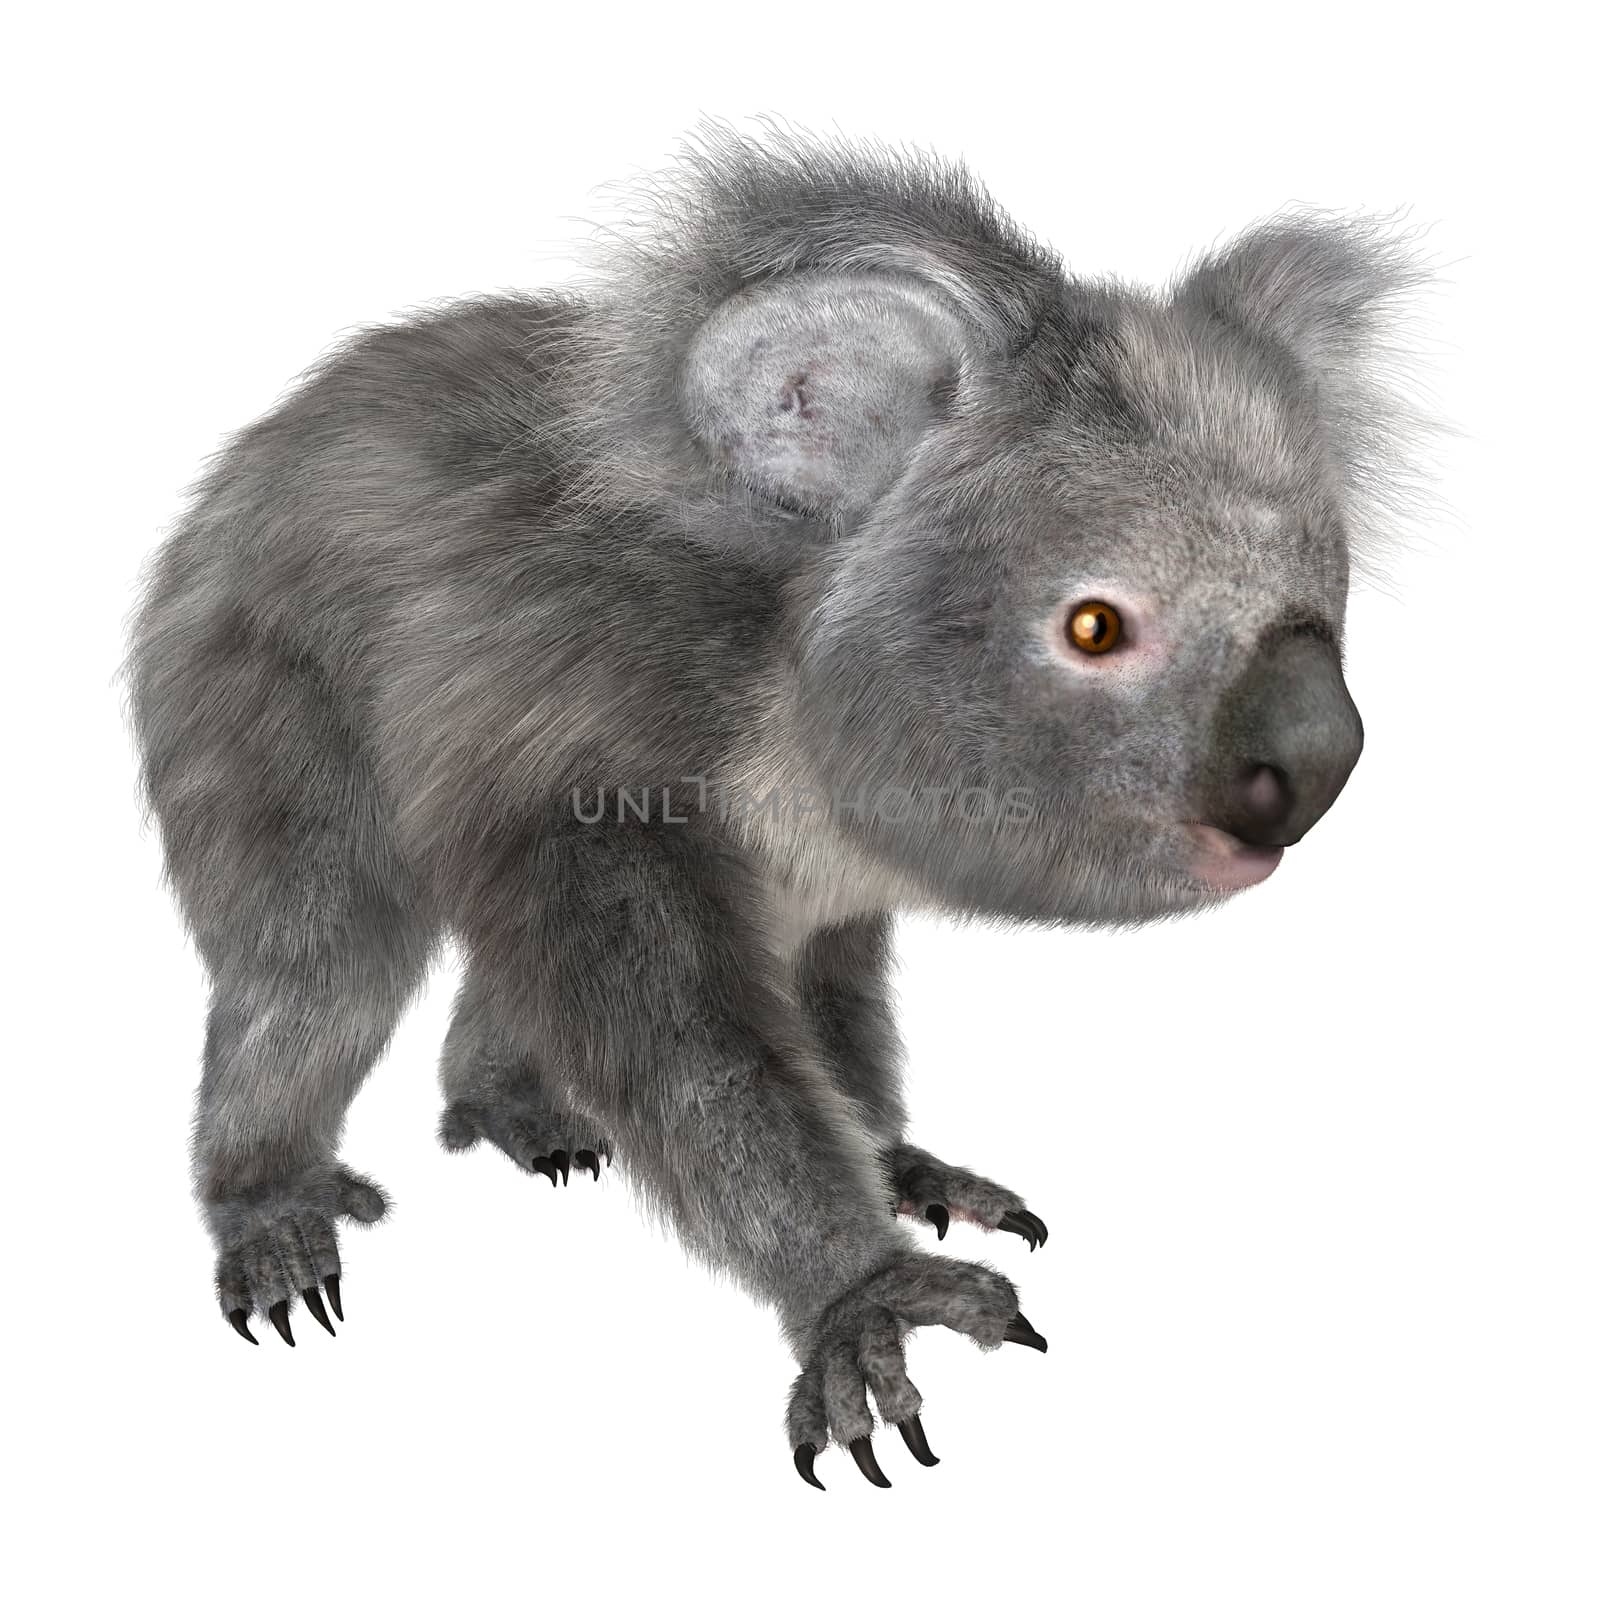 3D digital render of a cute koala walking isolated on white background